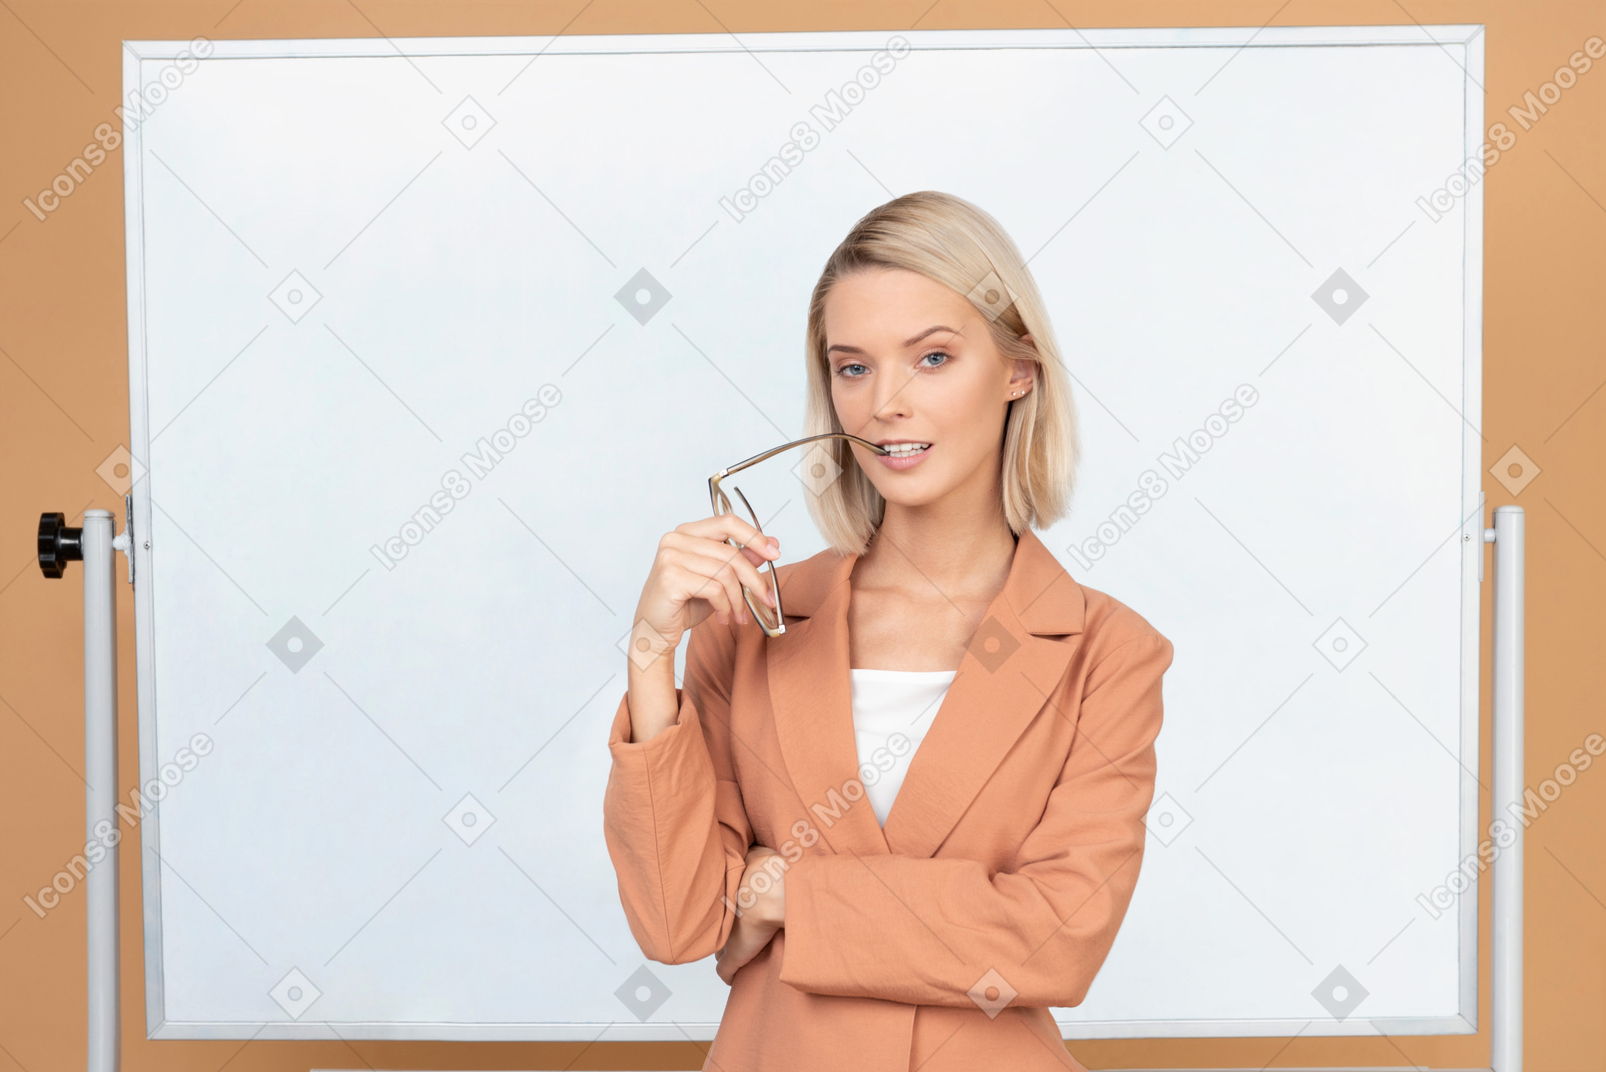 Beautiful young teacher bitting her eyeglasses like thinking about something